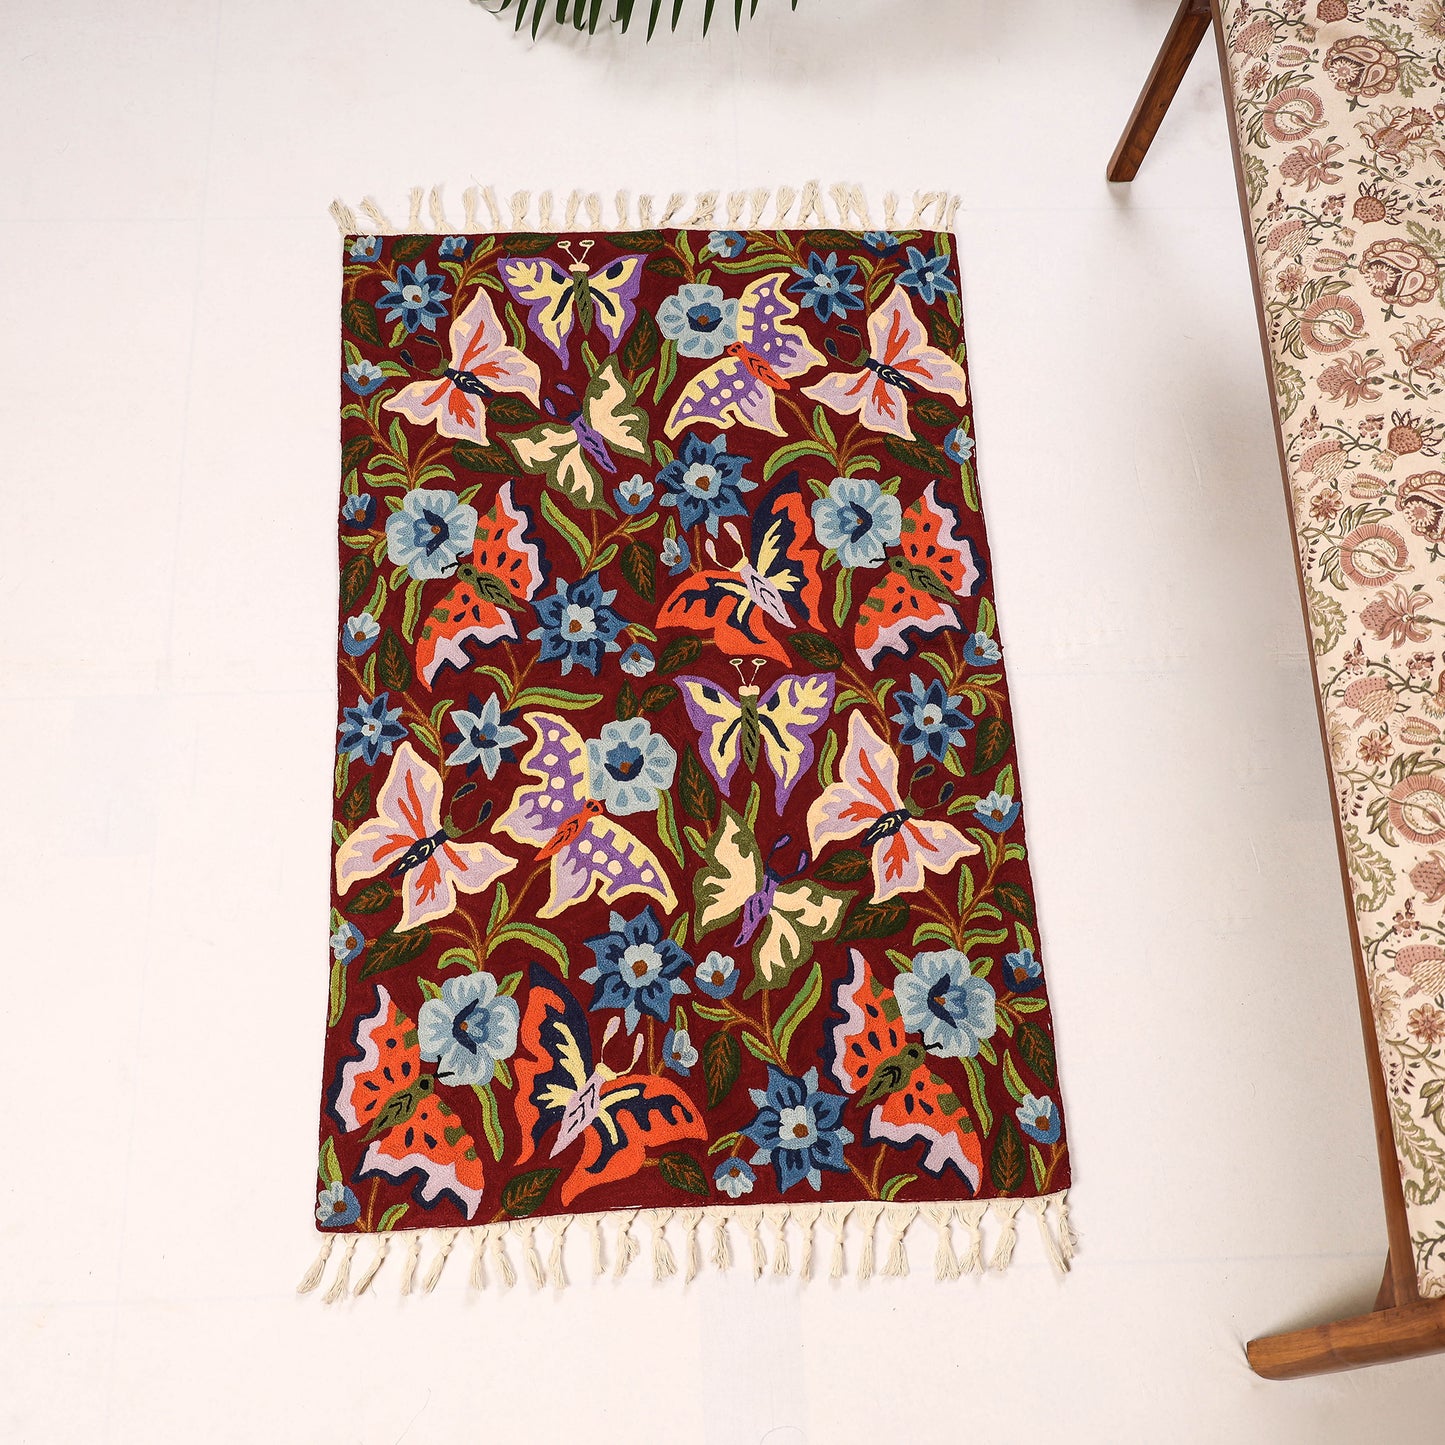 Original Chain Stitch Crewel Wool Thread Hand Embroidery Rug / Carpet (47 x 29 in)